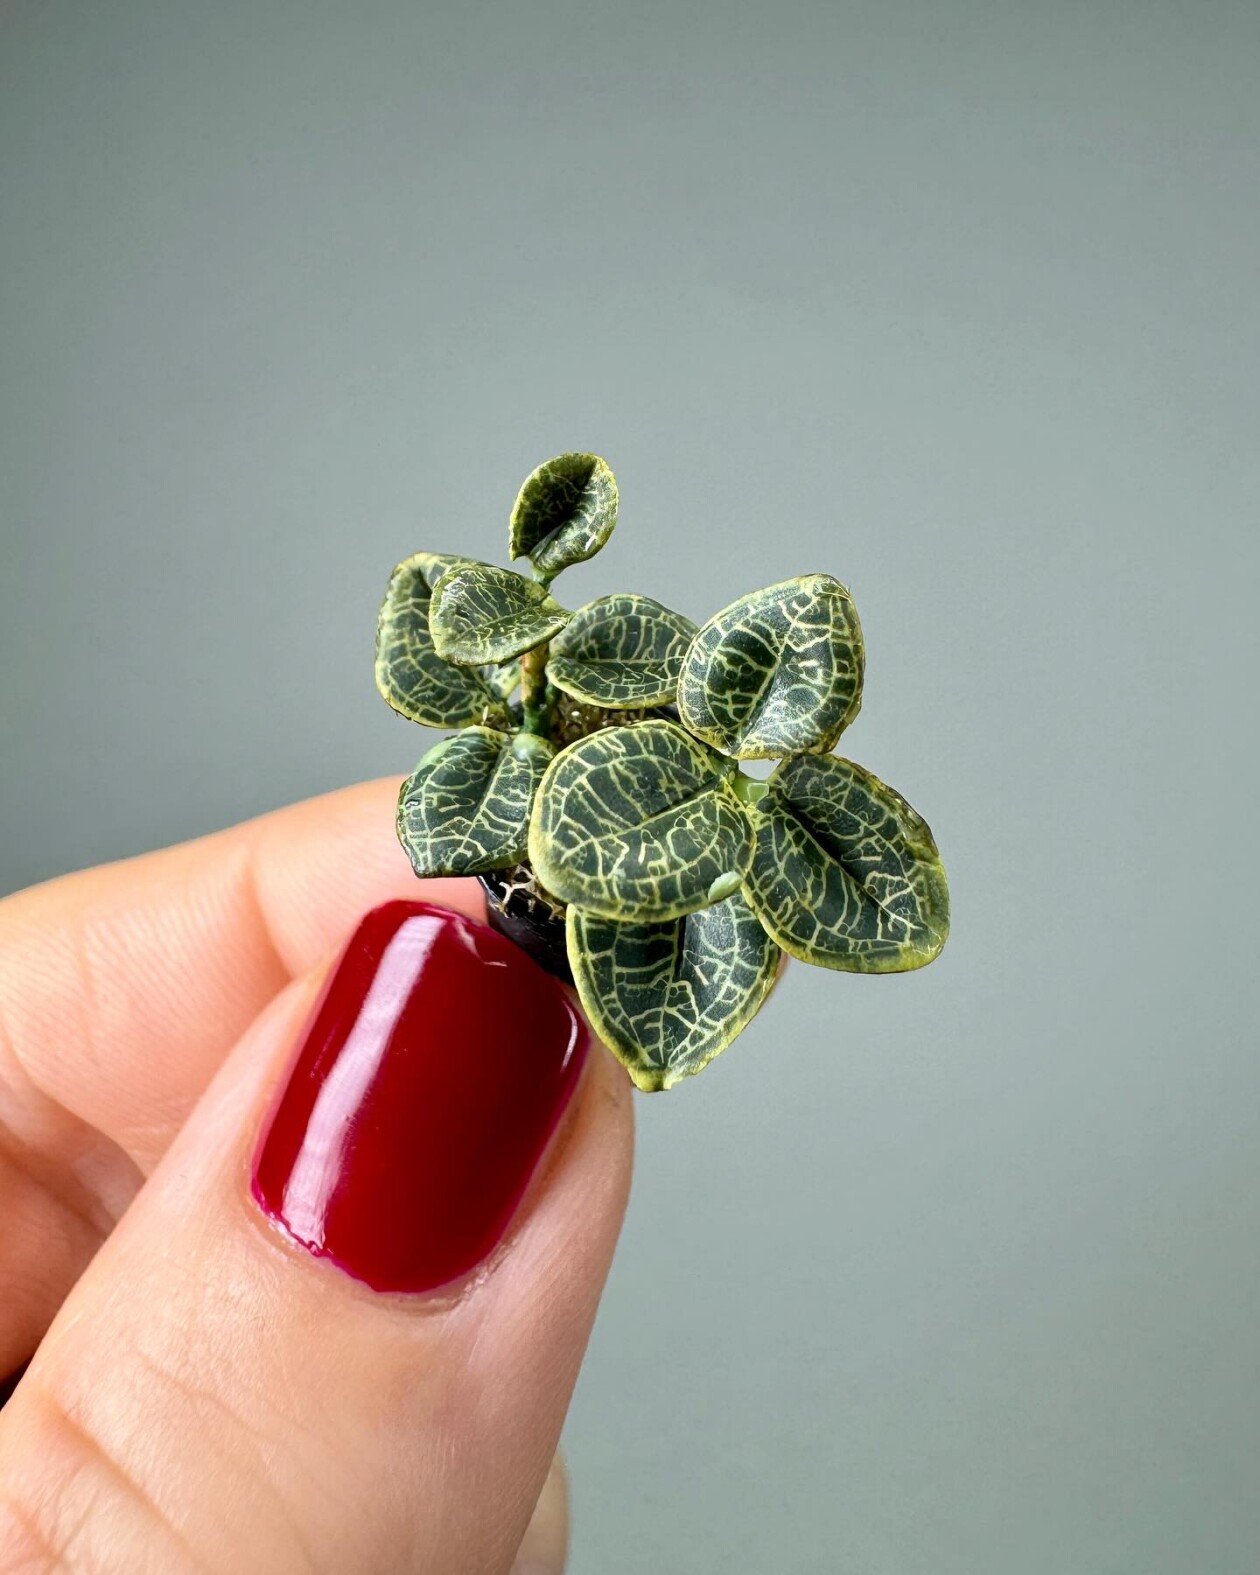 Handmade Miniature Polymer Clay Plants By Astrid Wilk (11)